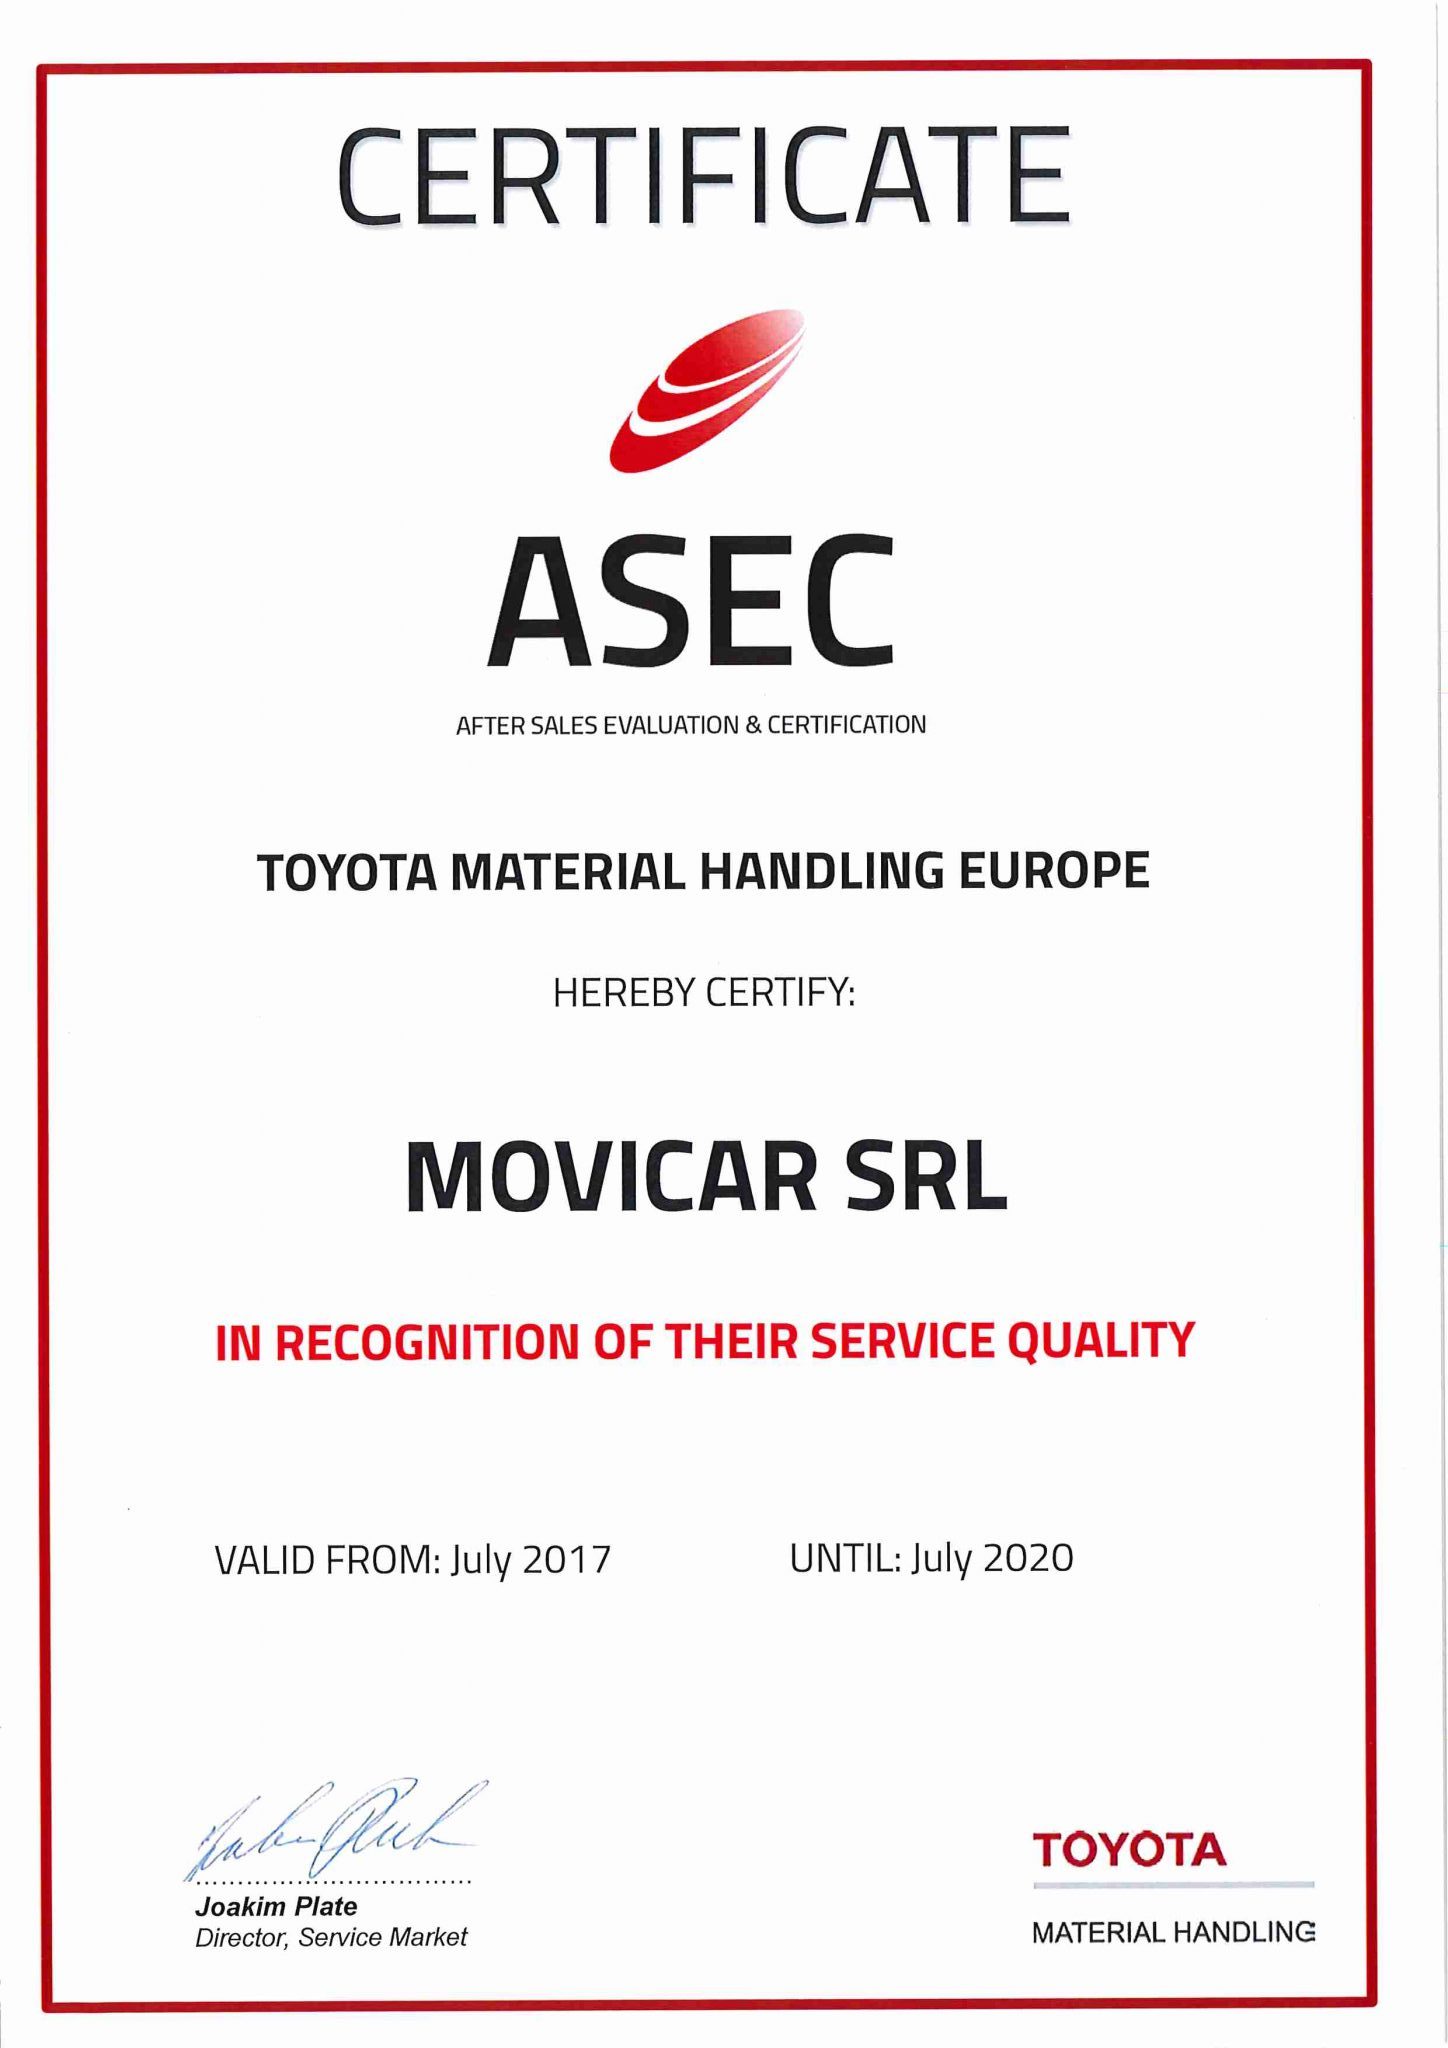 Movicar certificazione Asec Toyota per l'assistenza